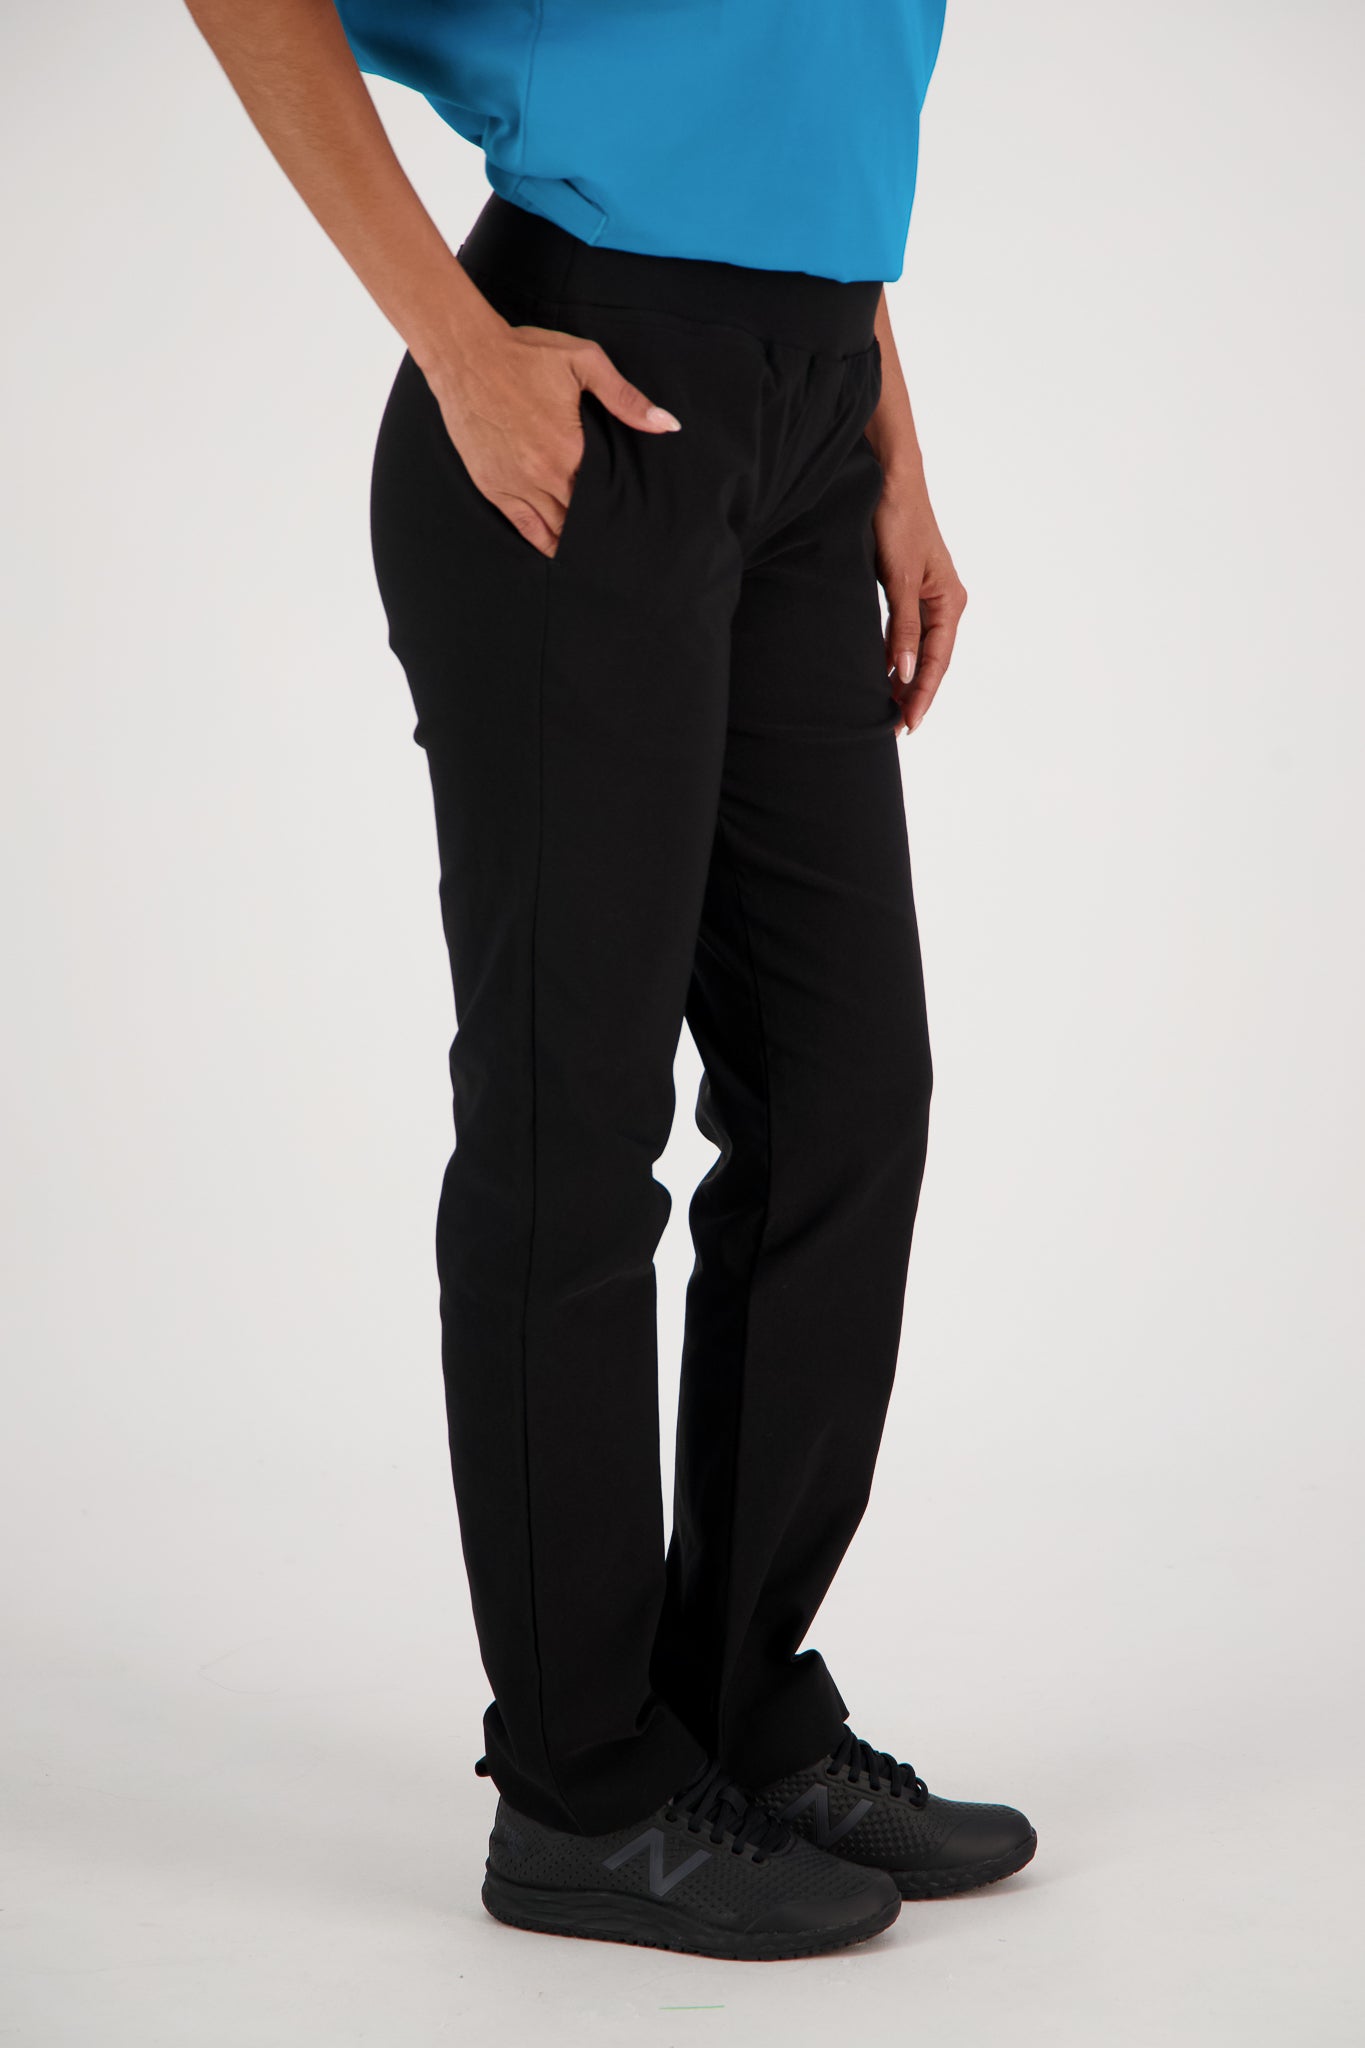 Savannah Women's Full Length Bengaline Pant Black